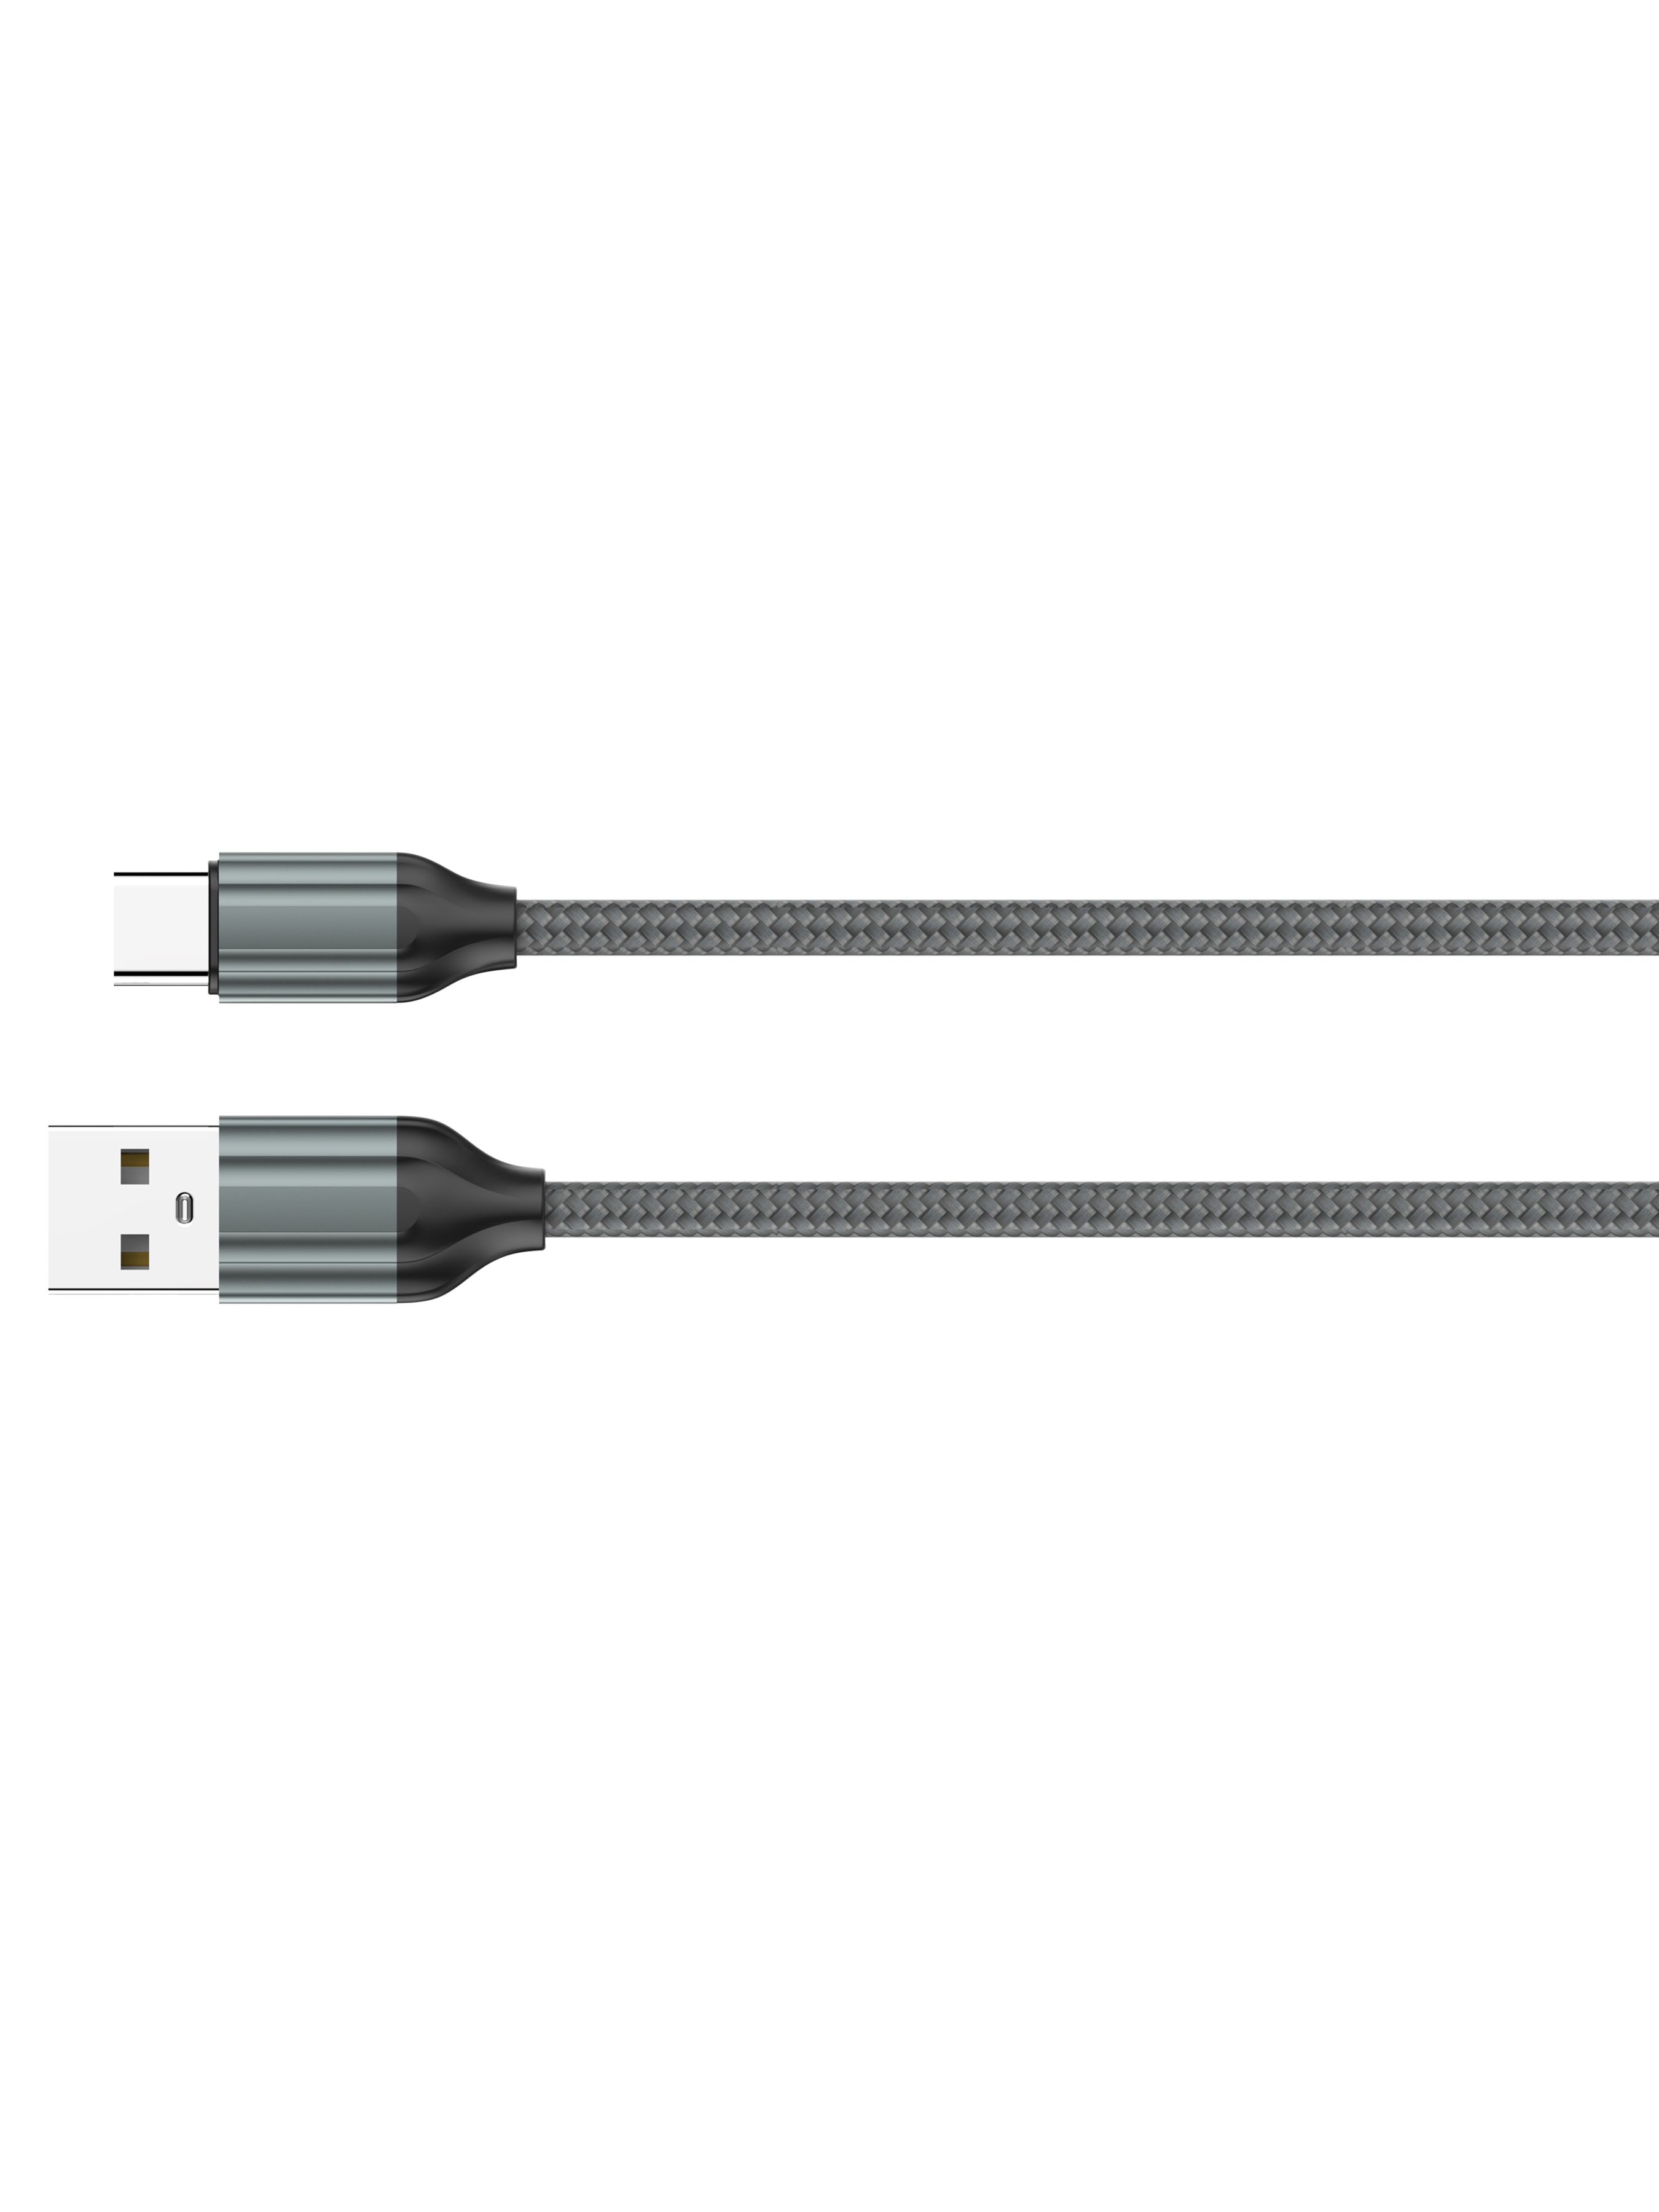 LDNIO LS442/ USB кабель Type-C/ 2m/ 2.4A/ медь: 112 жил/ Gray